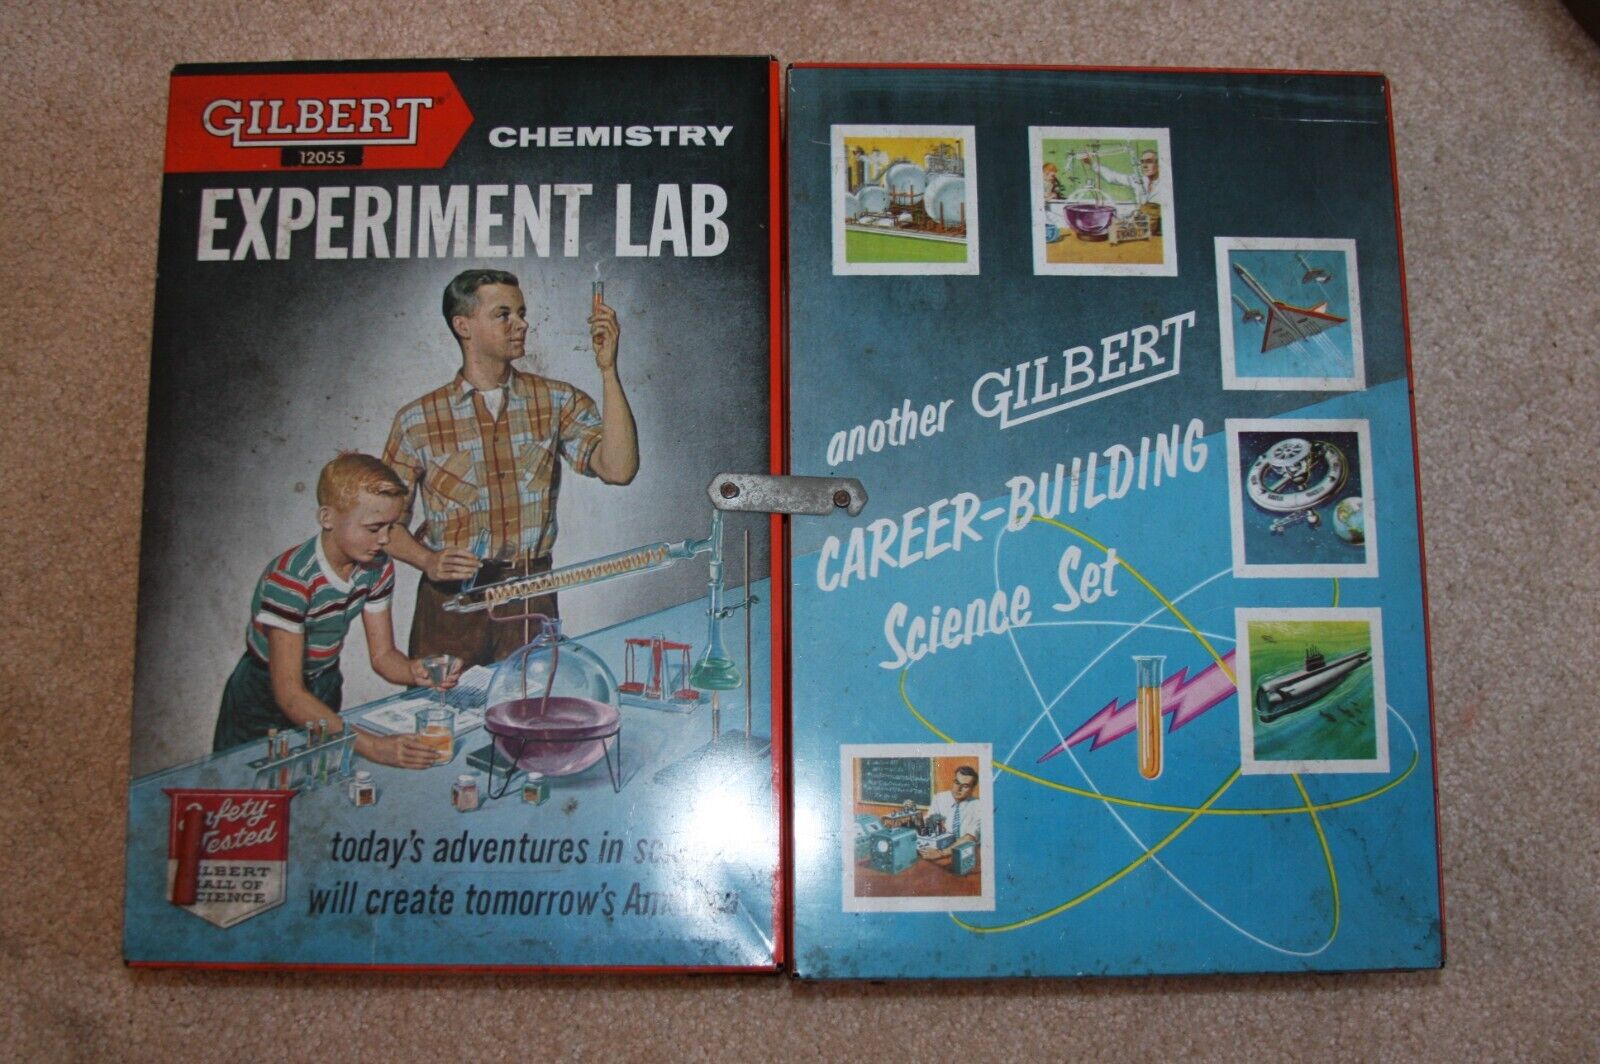 Vintage 1960's Gilbert Chemistry Experiment Lab #12056 Metal Gatefold Space Age